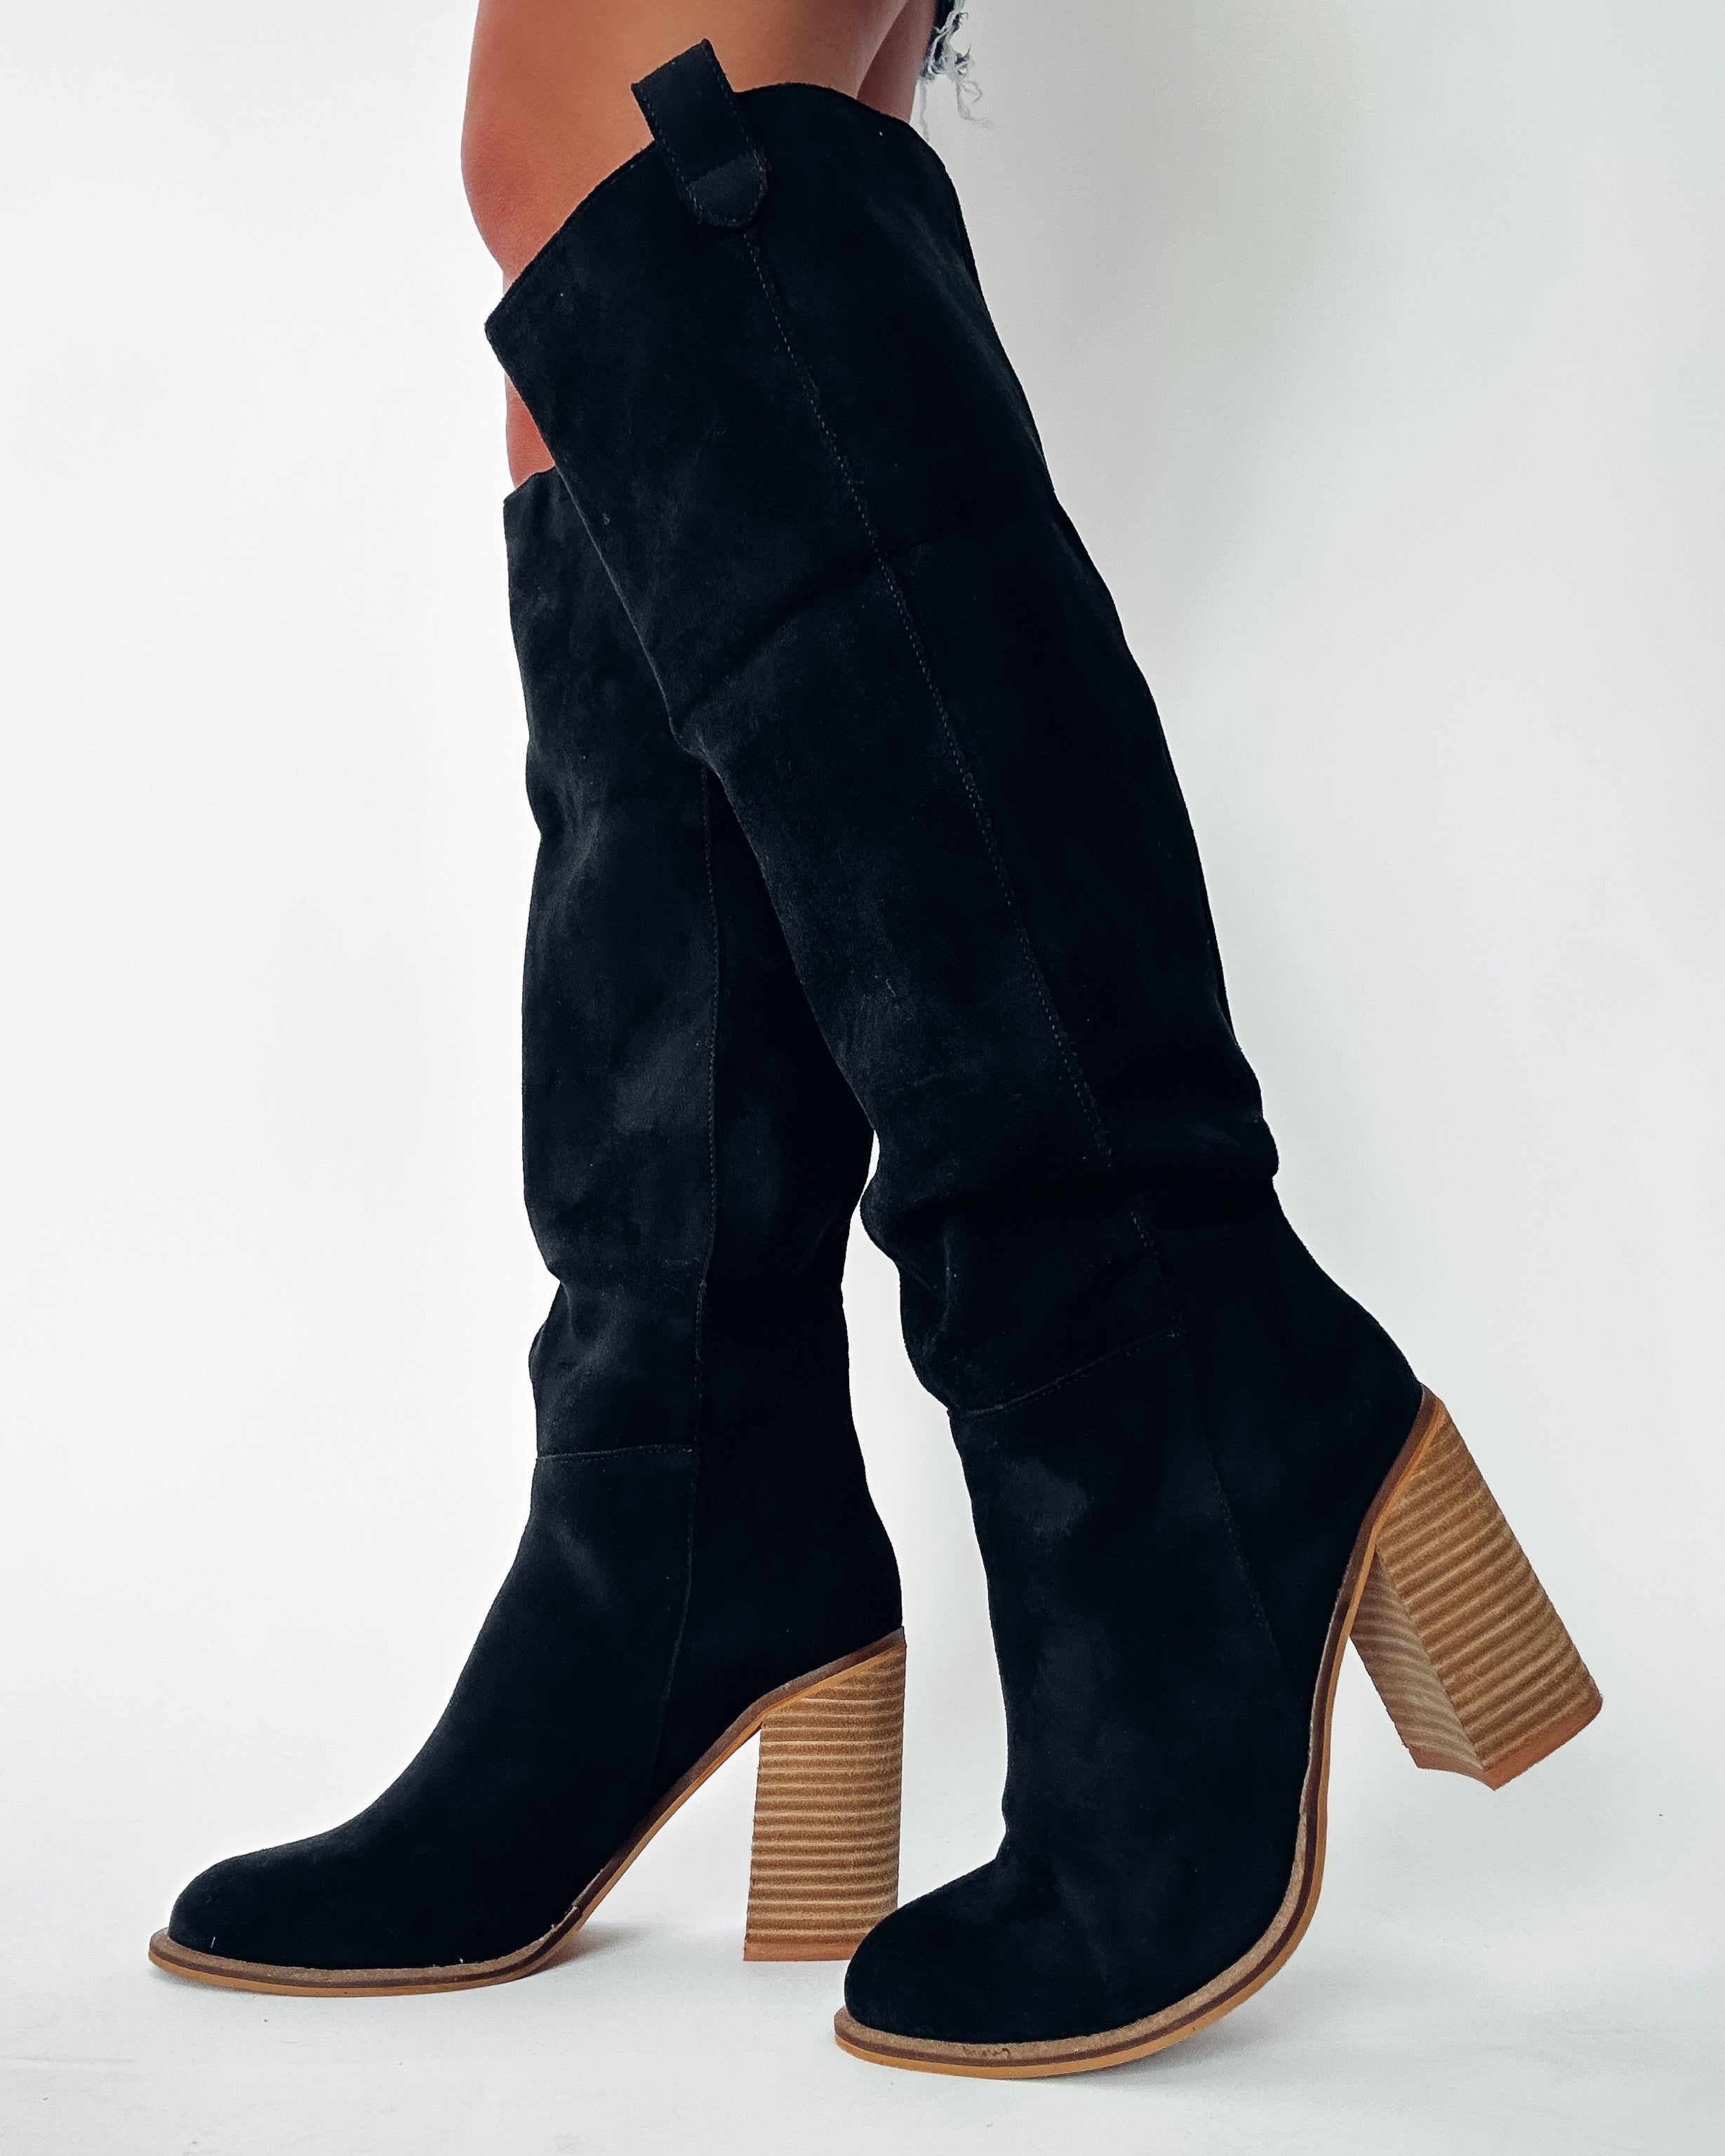 Saint Knee High Boots- Black